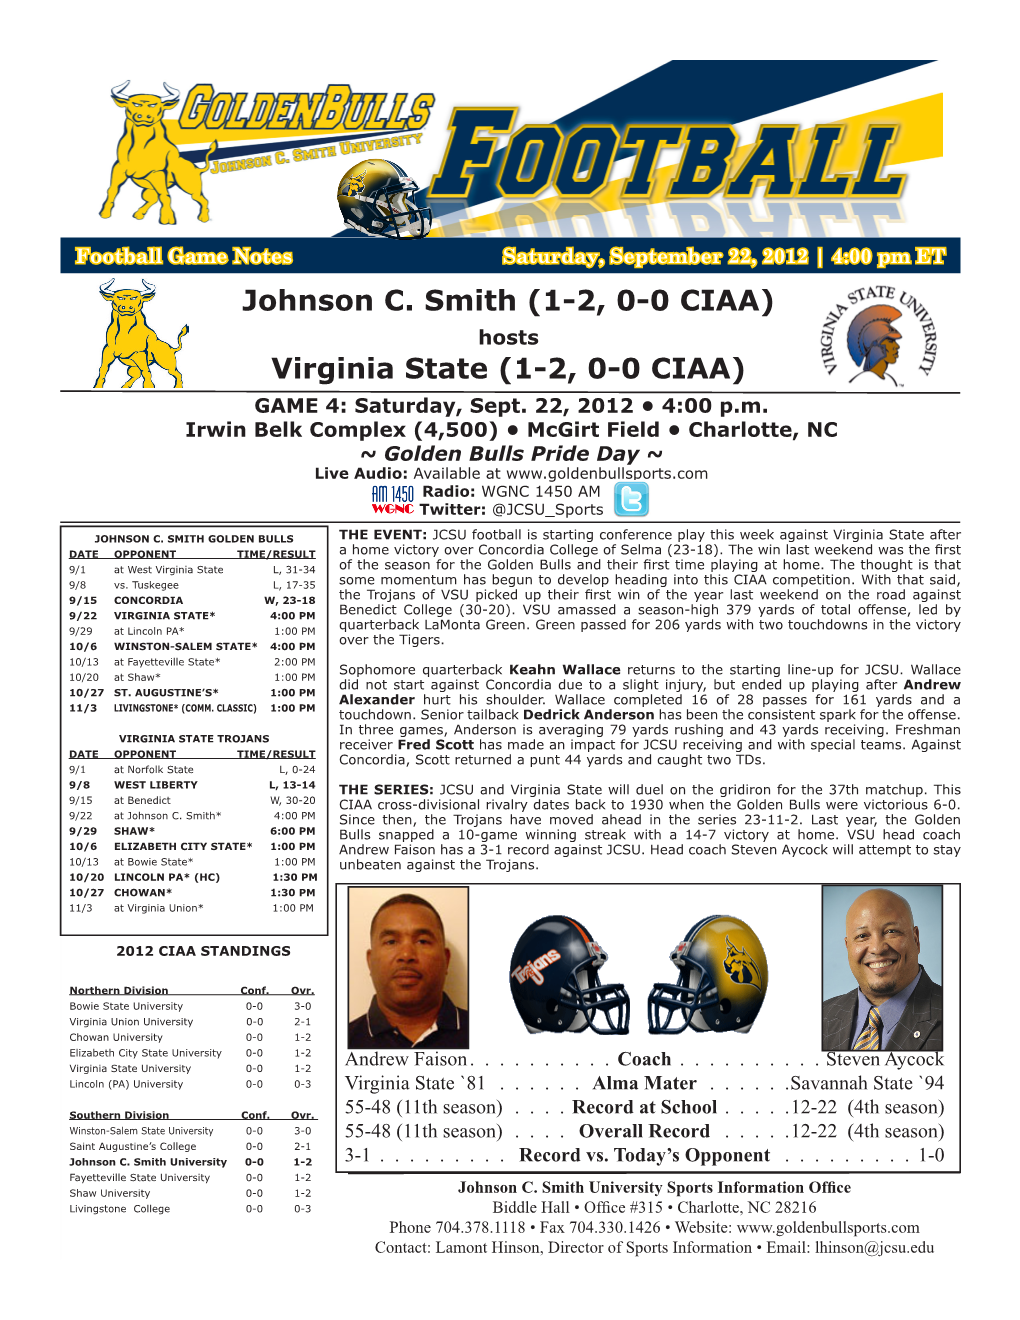 Virginia State (1-2, 0-0 CIAA) GAME 4: Saturday, Sept